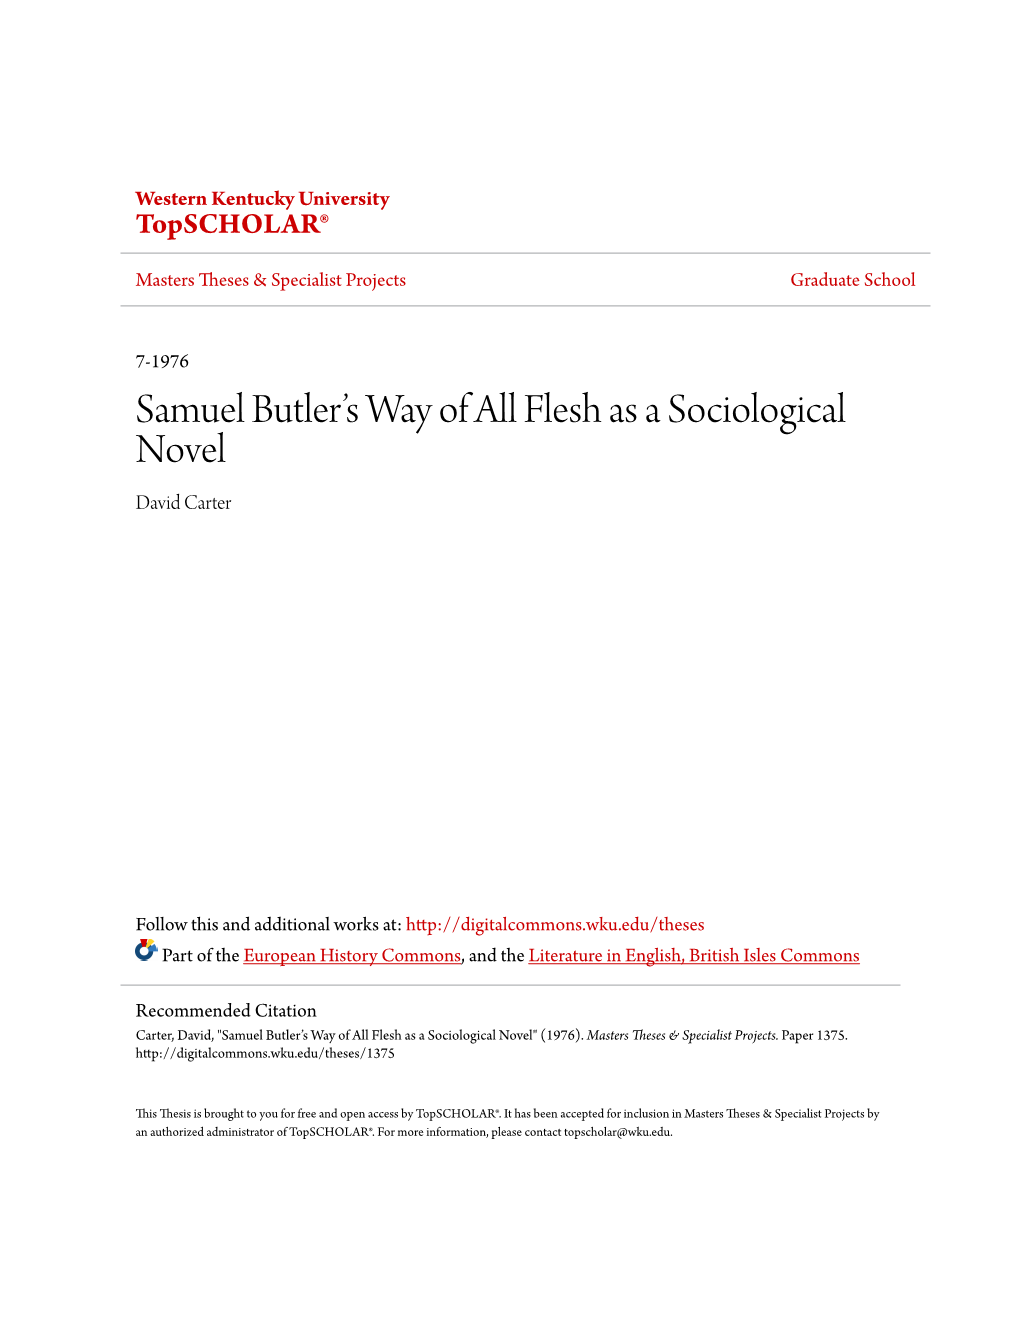 Samuel Butler's Way of All Flesh As a Sociological Novel